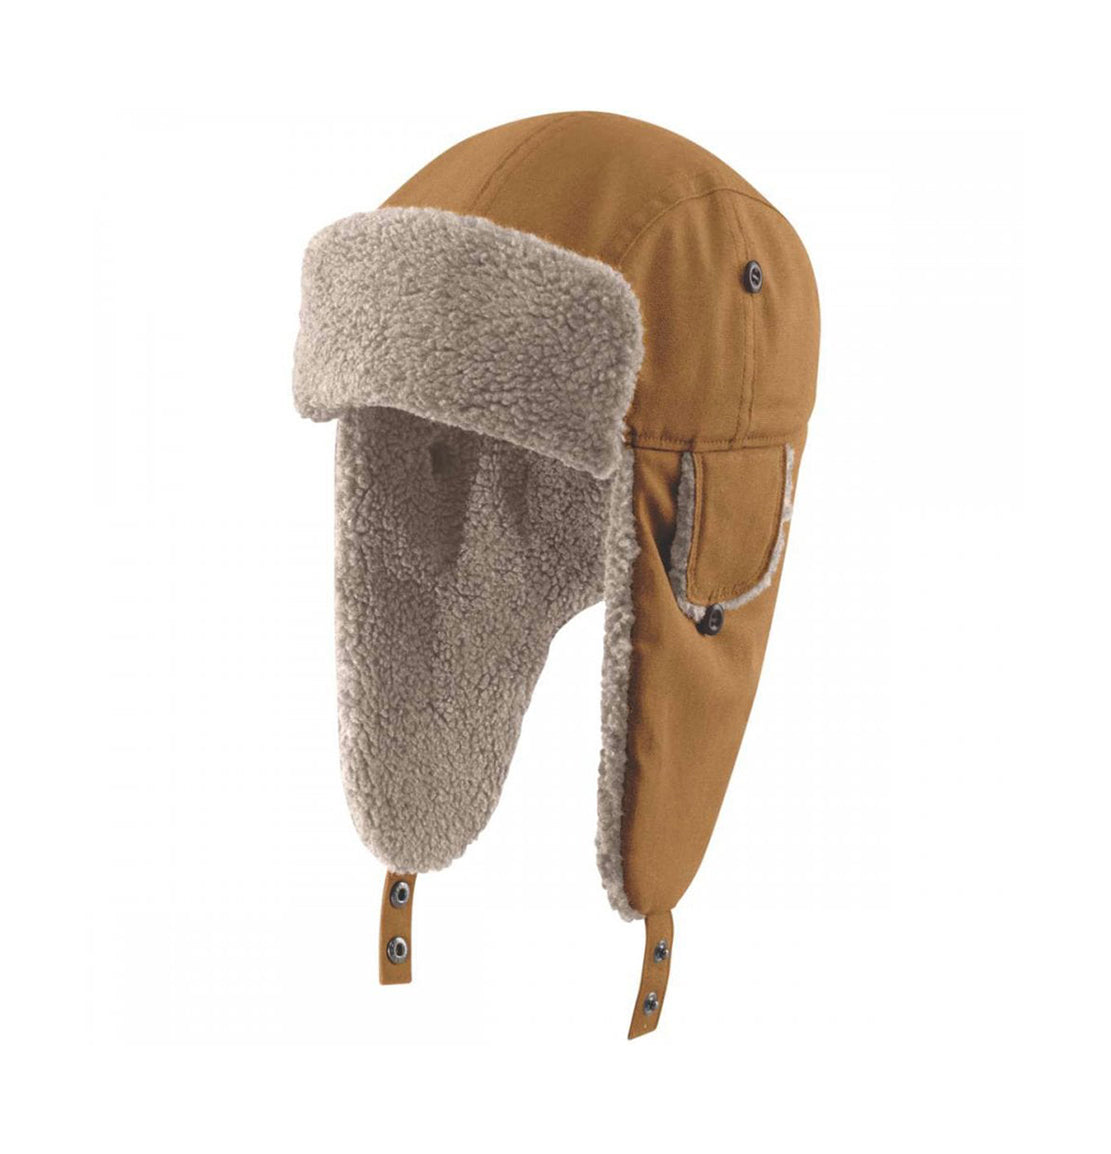 Carhartt trapper hat brown